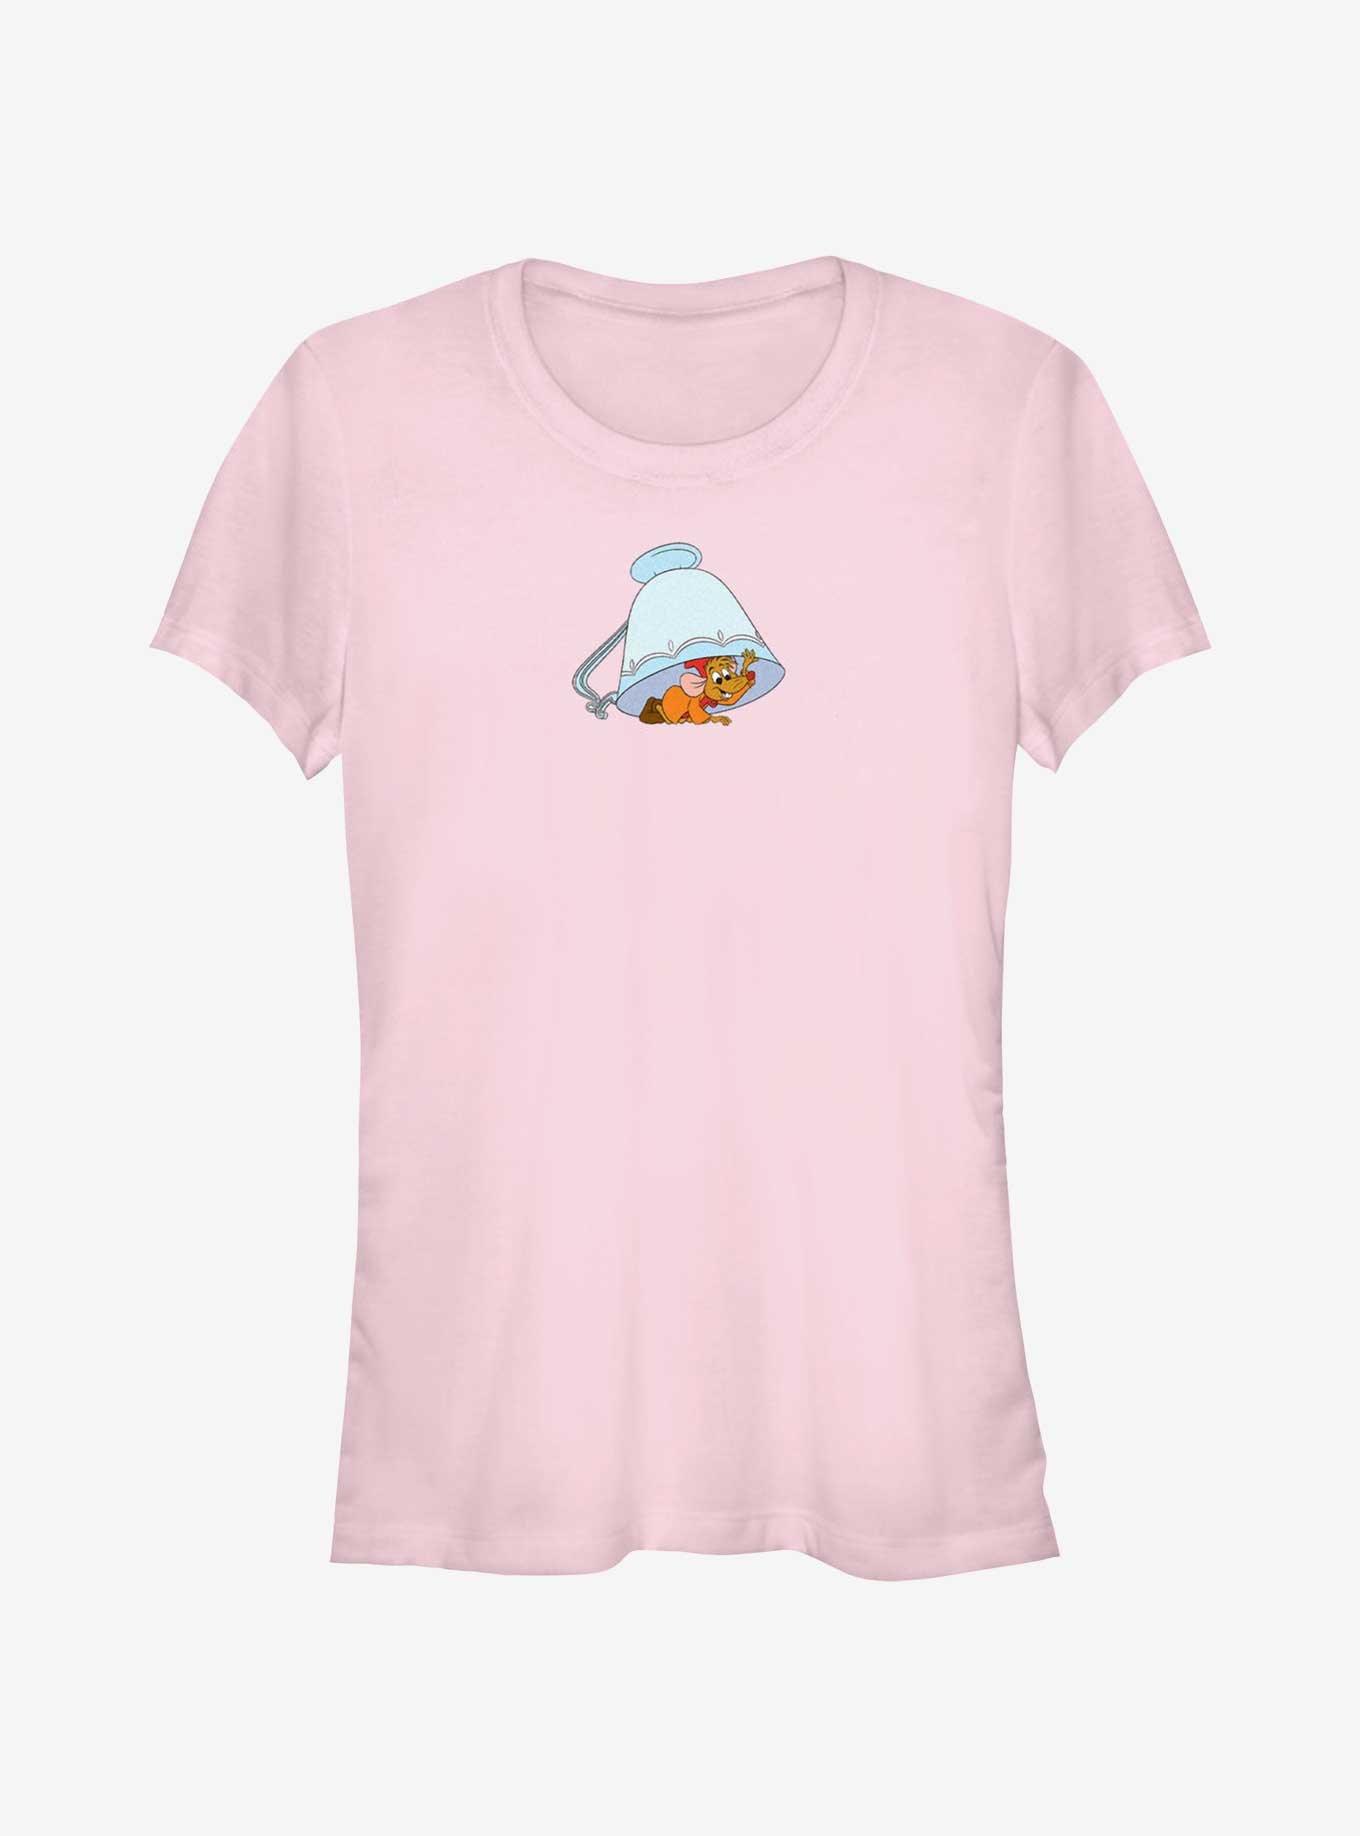 Disney Cinderella Jaq Under The Teacup Girls T-Shirt, LIGHT PINK, hi-res